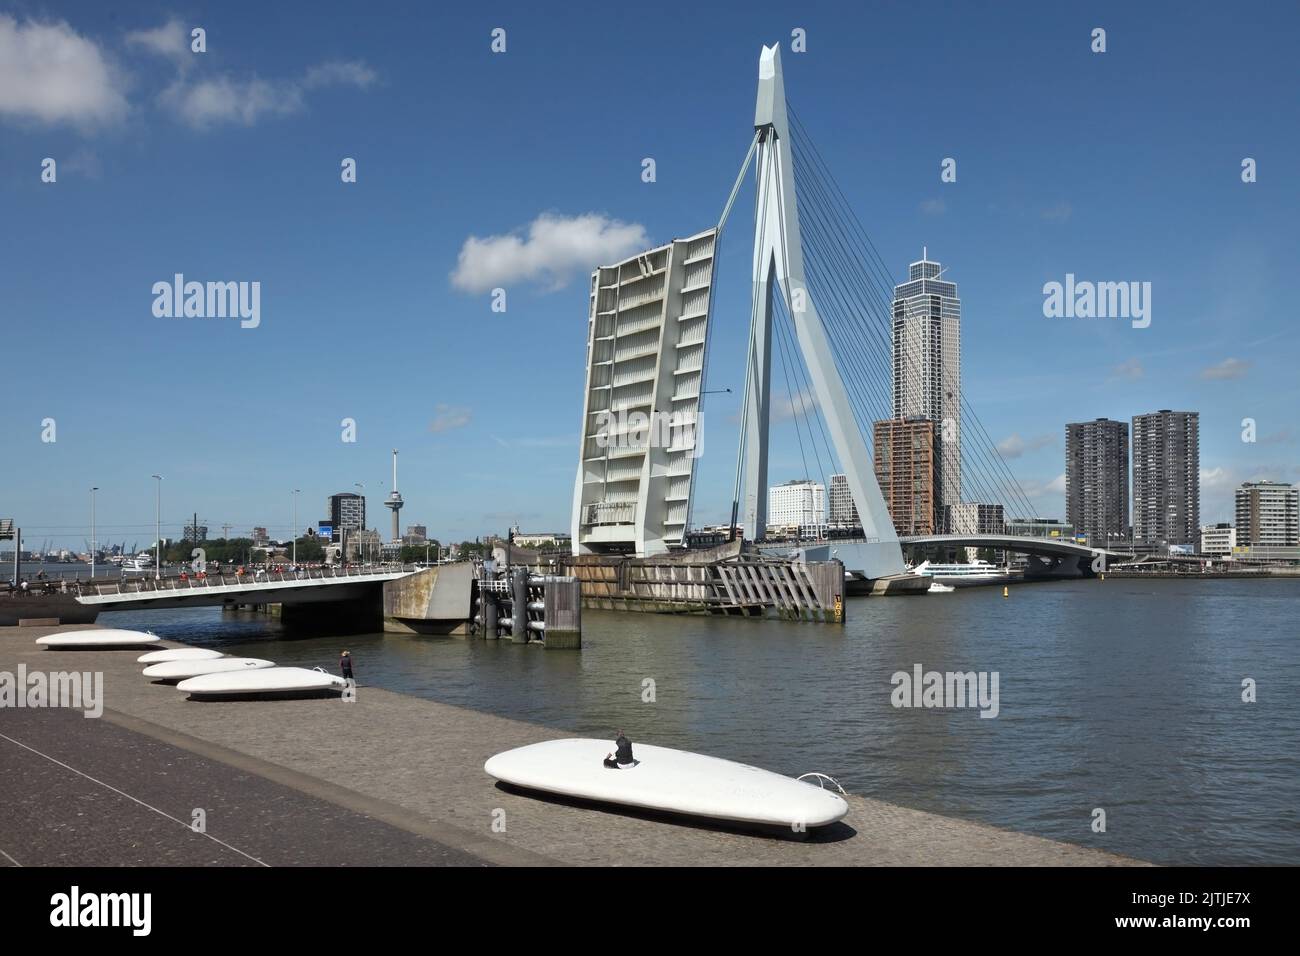 The Erasmusbrug or Erasmus Bridge (1996), Rotterdam, Netherlands in fully raised position. Stock Photo